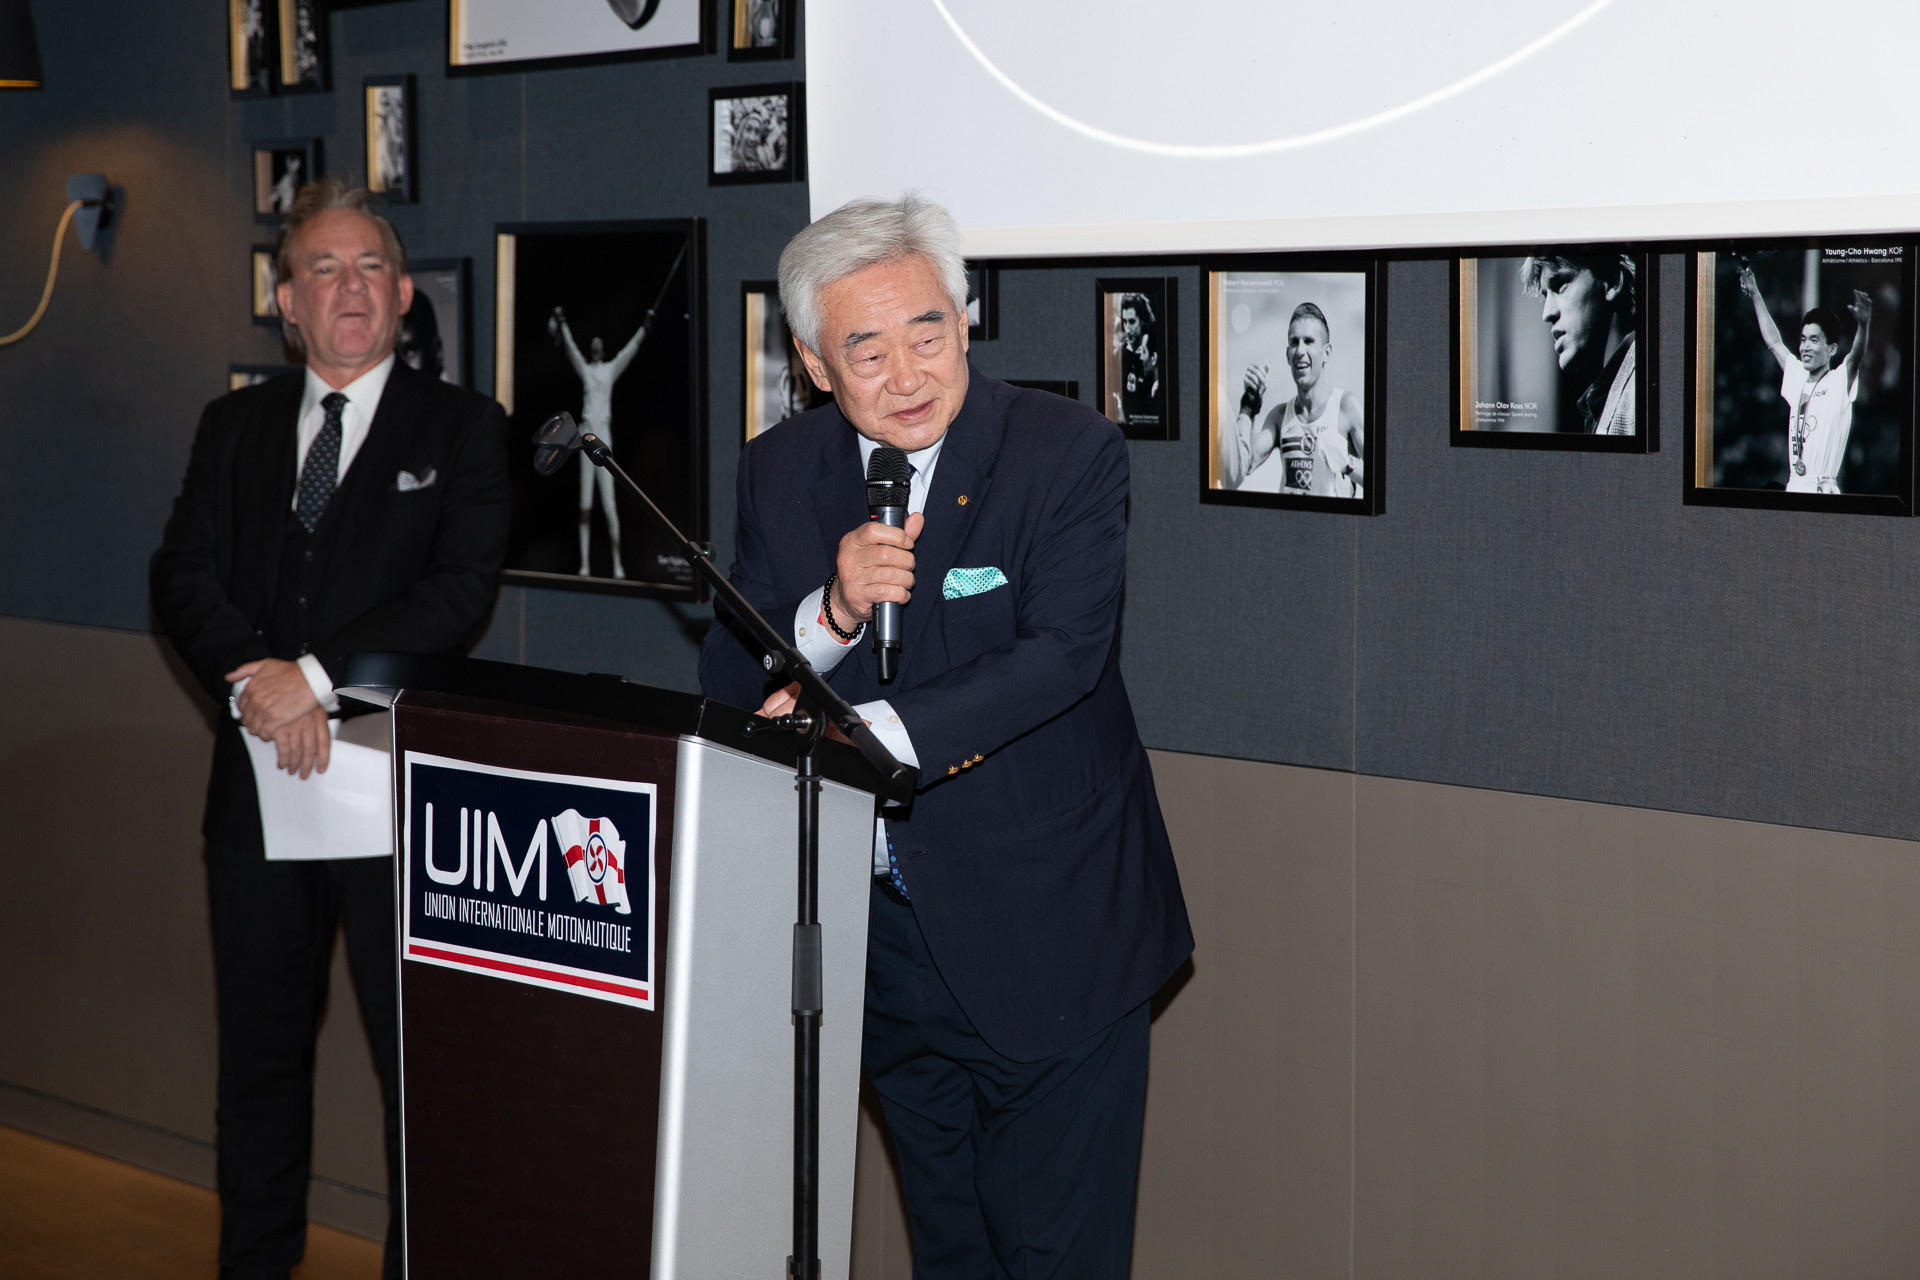 World Taekwondo President Choue honoured at UIM Awards